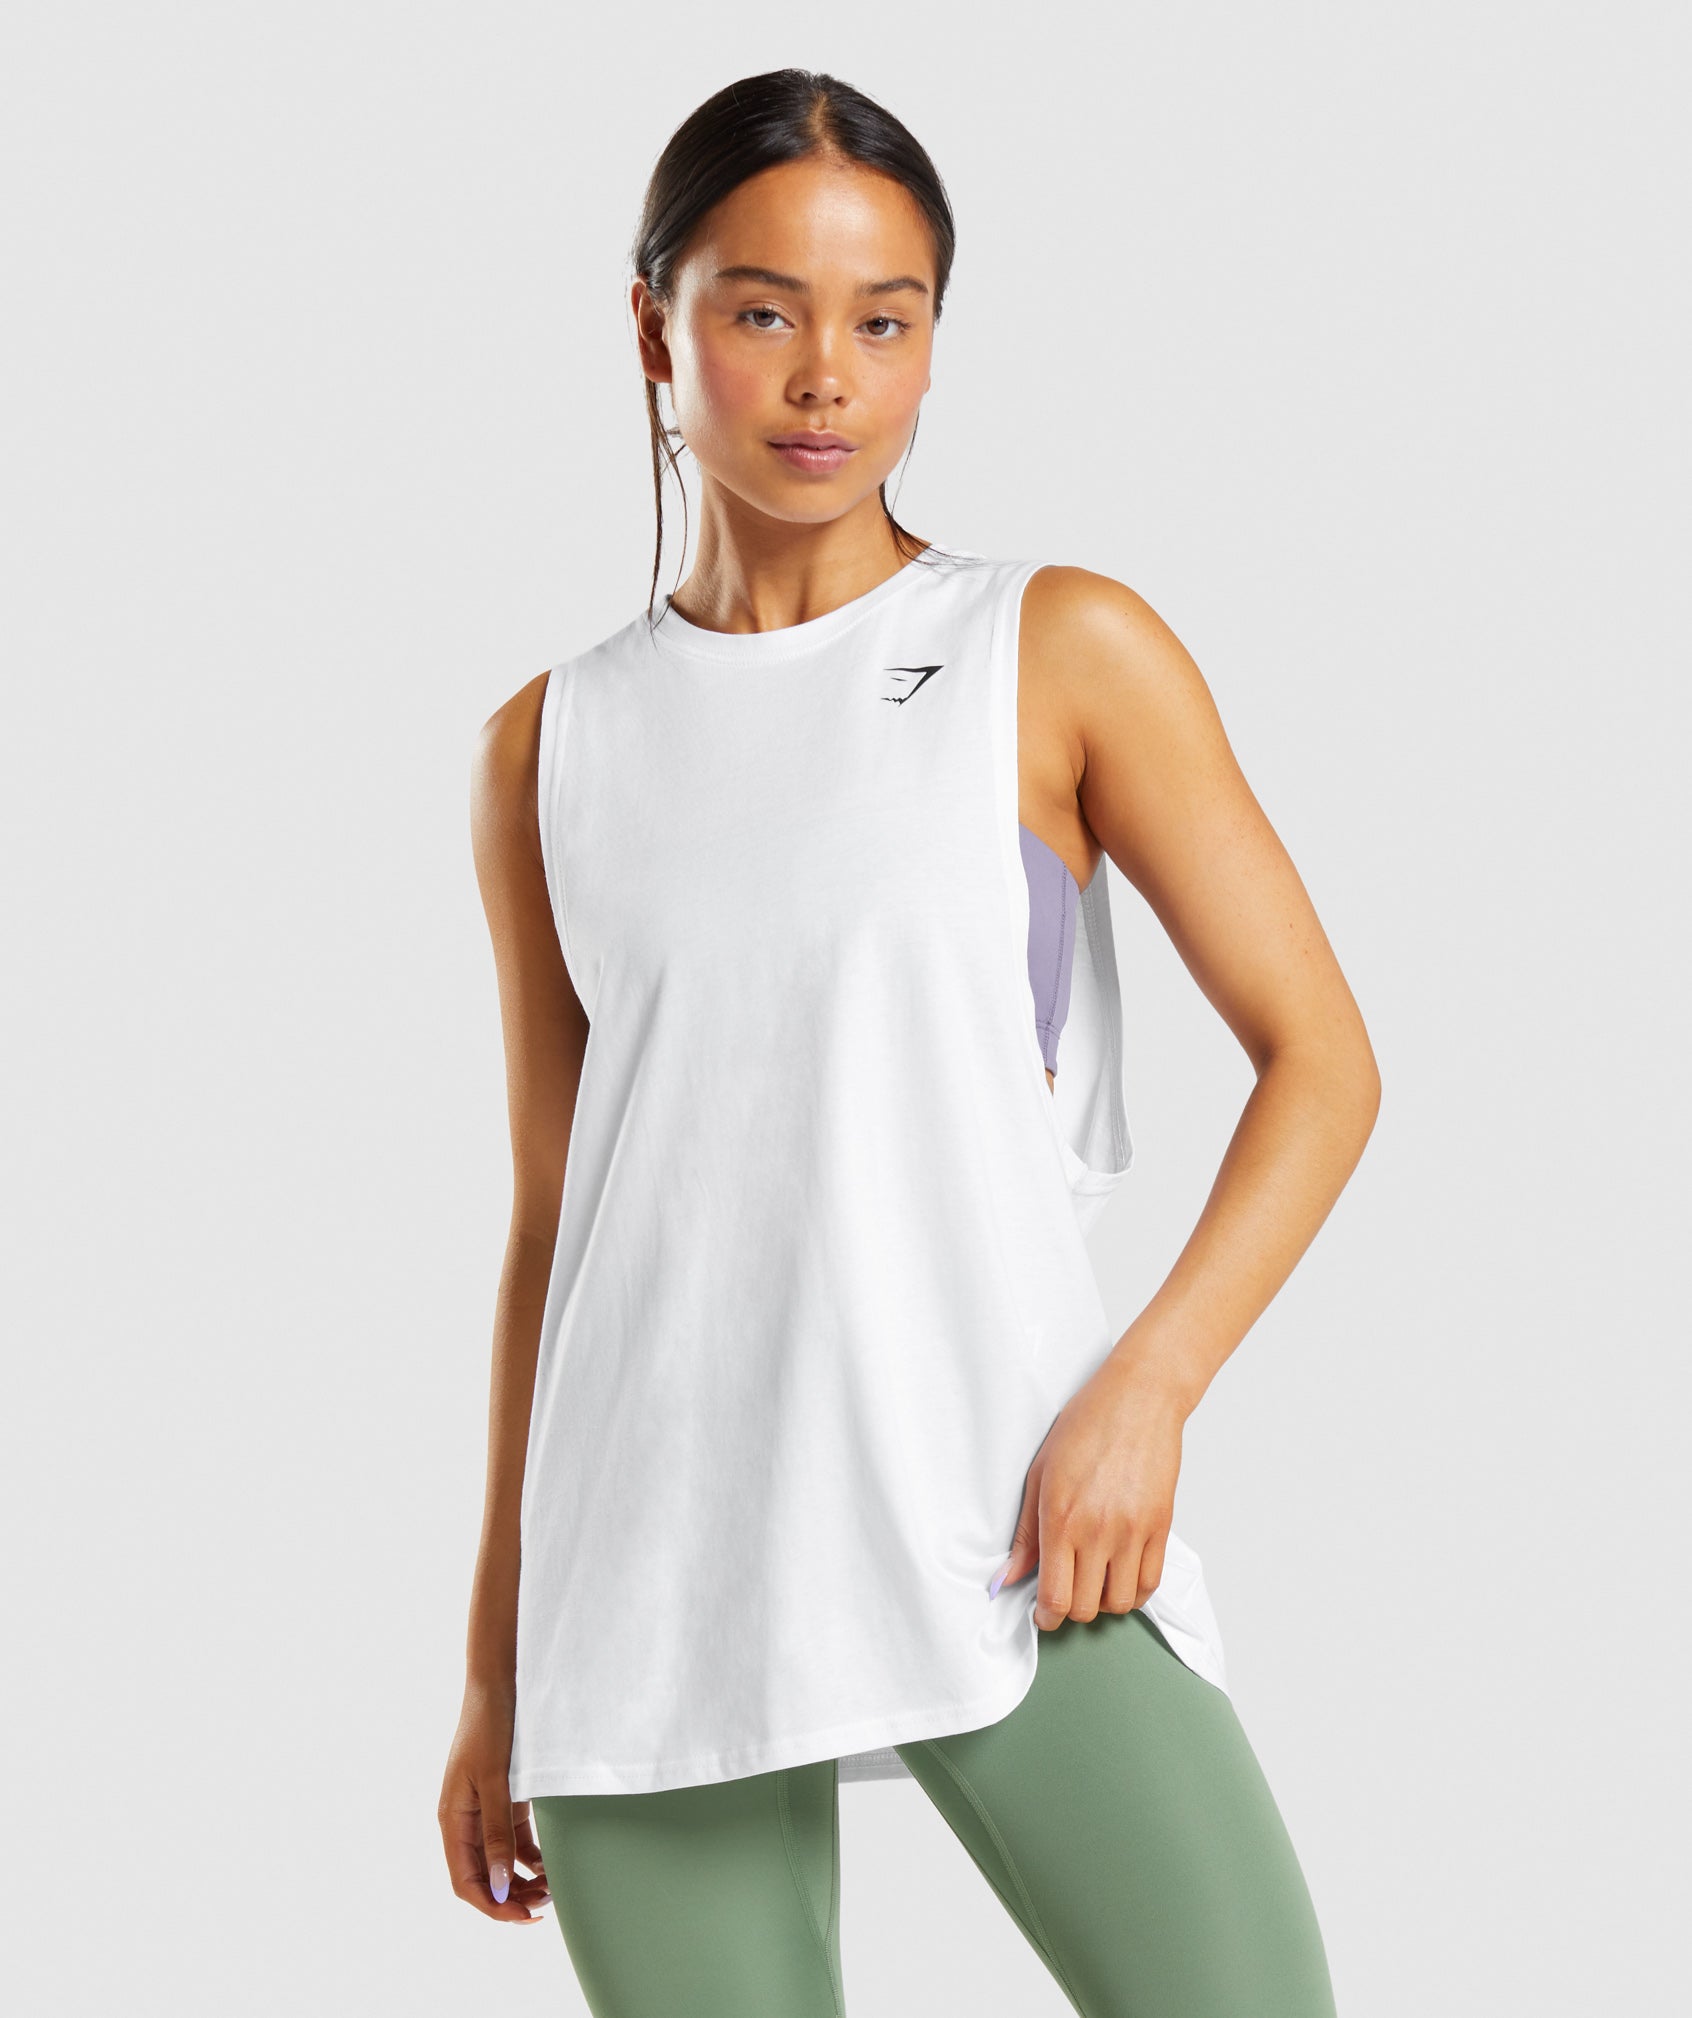 Bombshell Sportswear White Athletic Tank Tops for Women